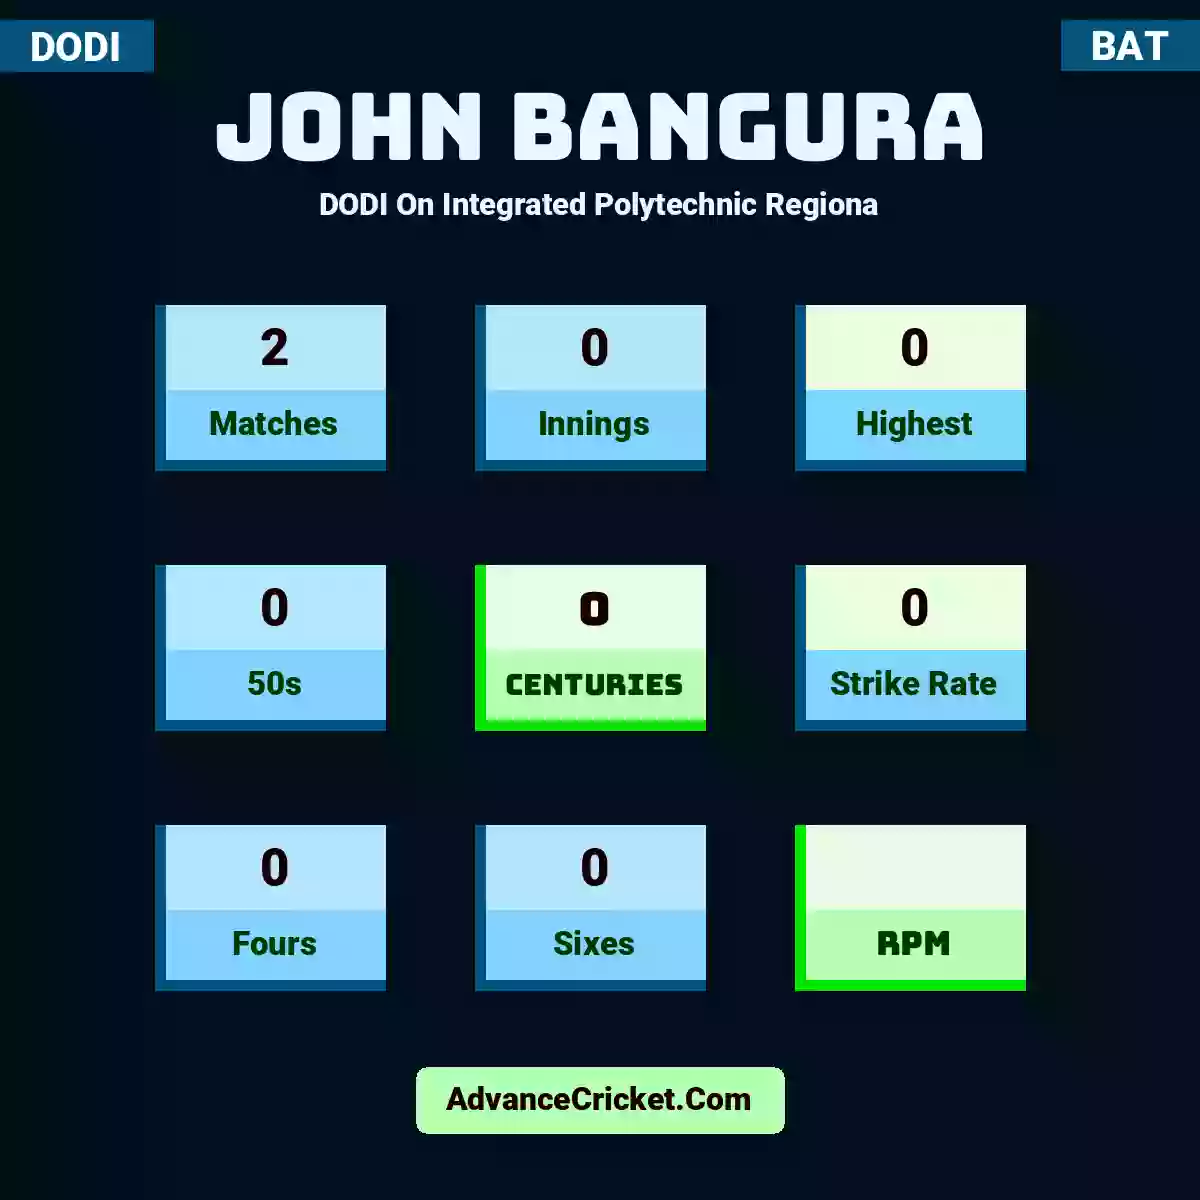 John Bangura DODI  On Integrated Polytechnic Regiona, John Bangura played 2 matches, scored 0 runs as highest, 0 half-centuries, and 0 centuries, with a strike rate of 0. J.Bangura hit 0 fours and 0 sixes.